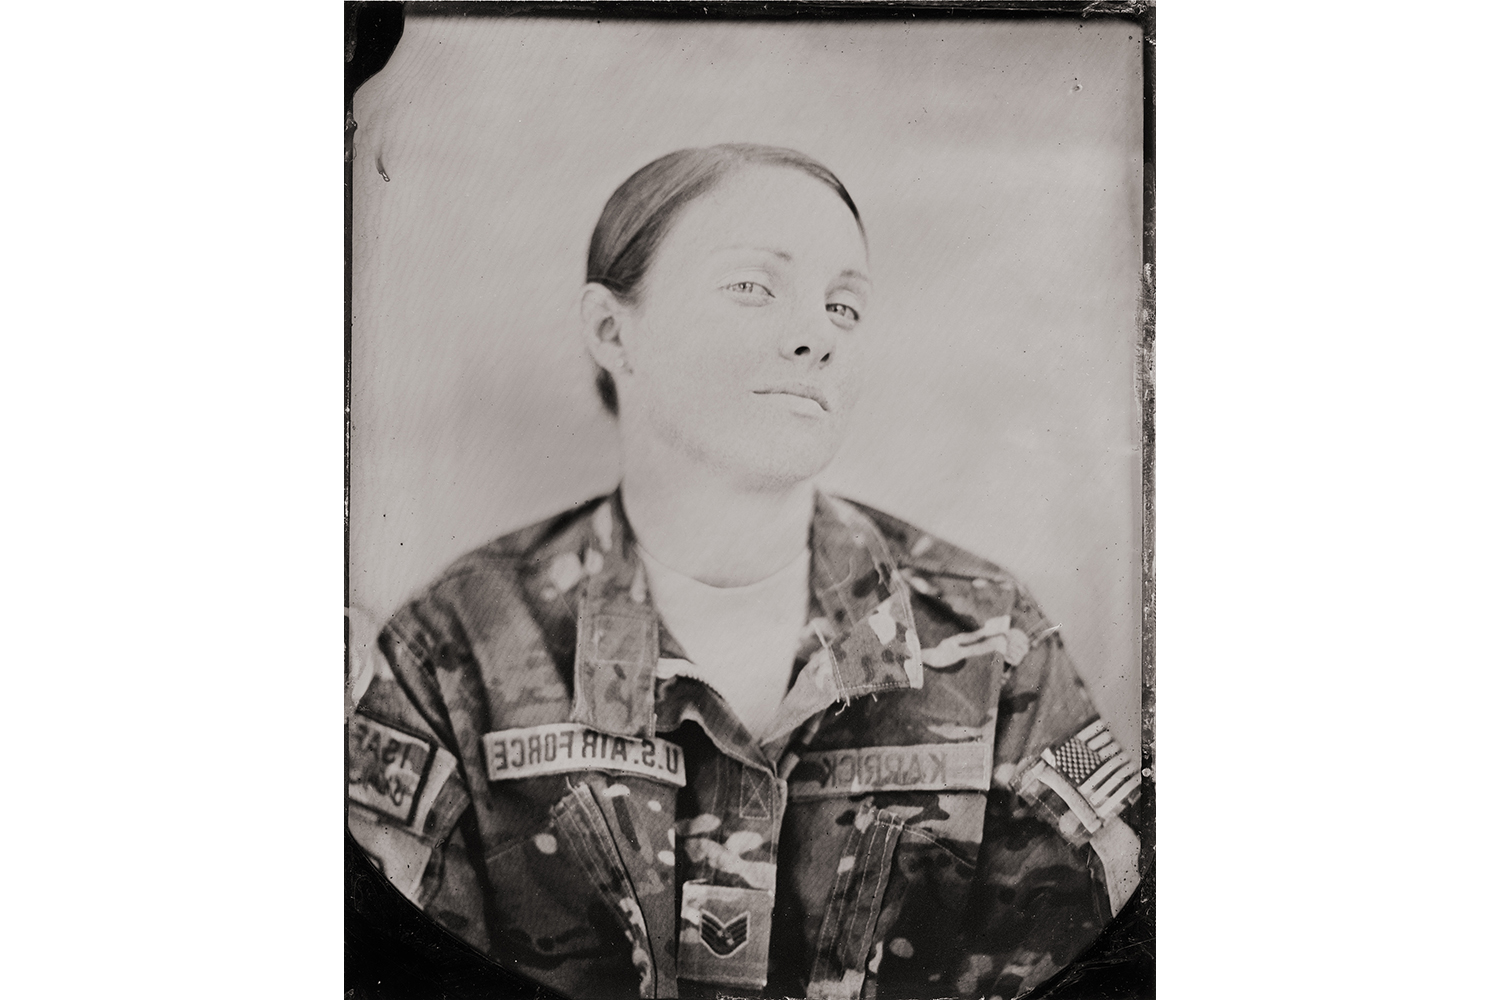 Ed Drew’s tintype series of US soldiers